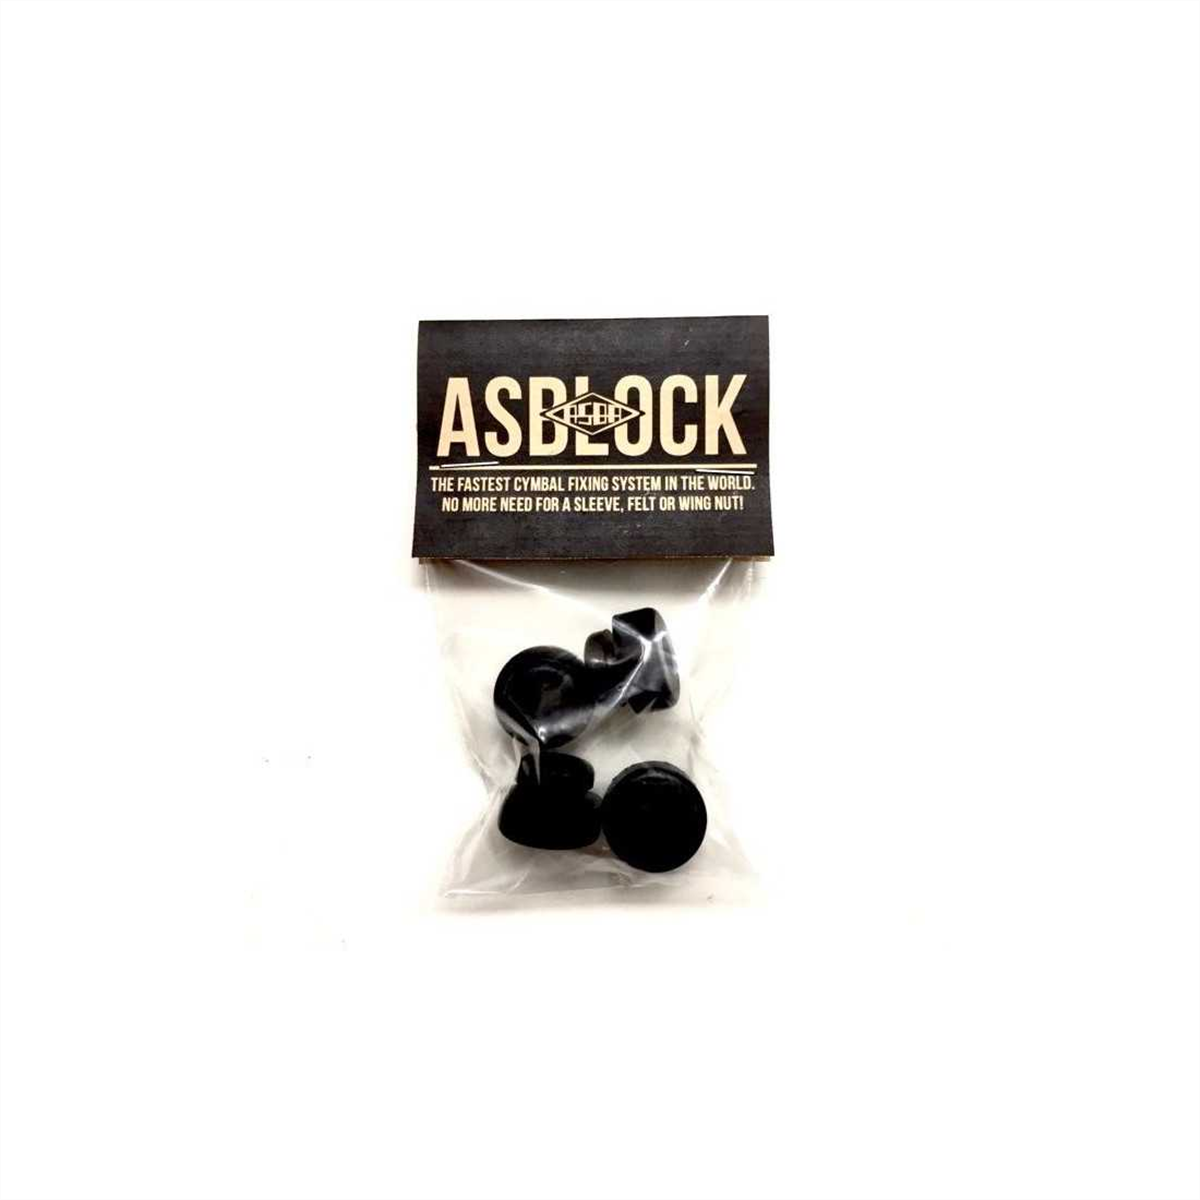 ASBA Asblock cymbal mounting system